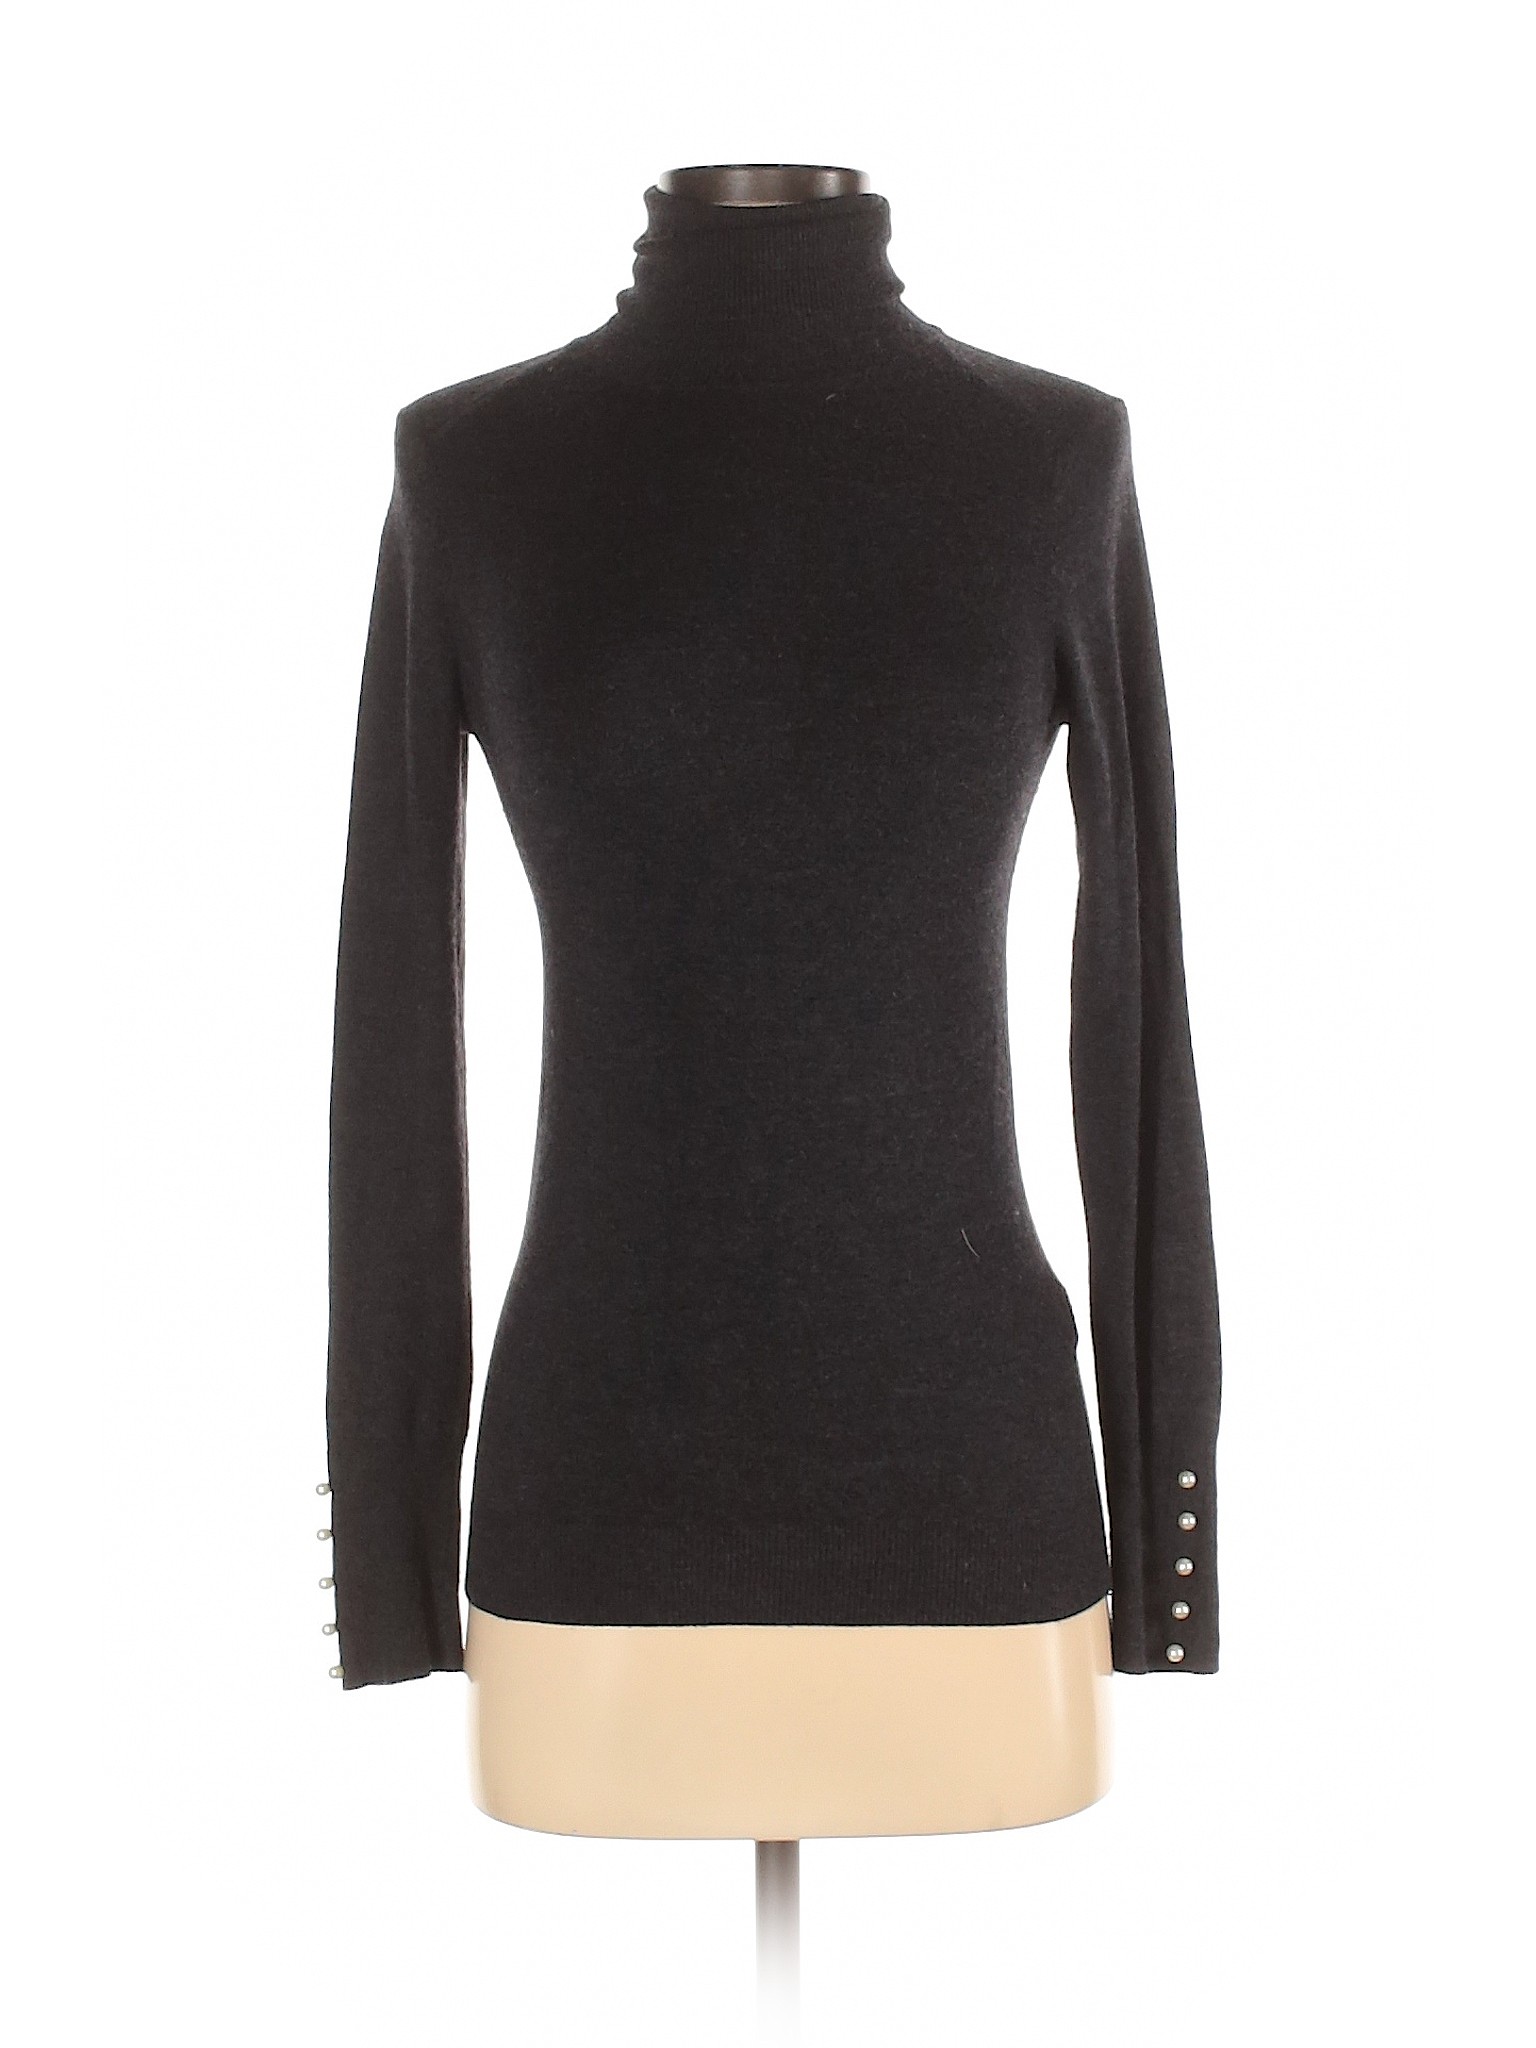 Zara Women Black Turtleneck Sweater S | eBay